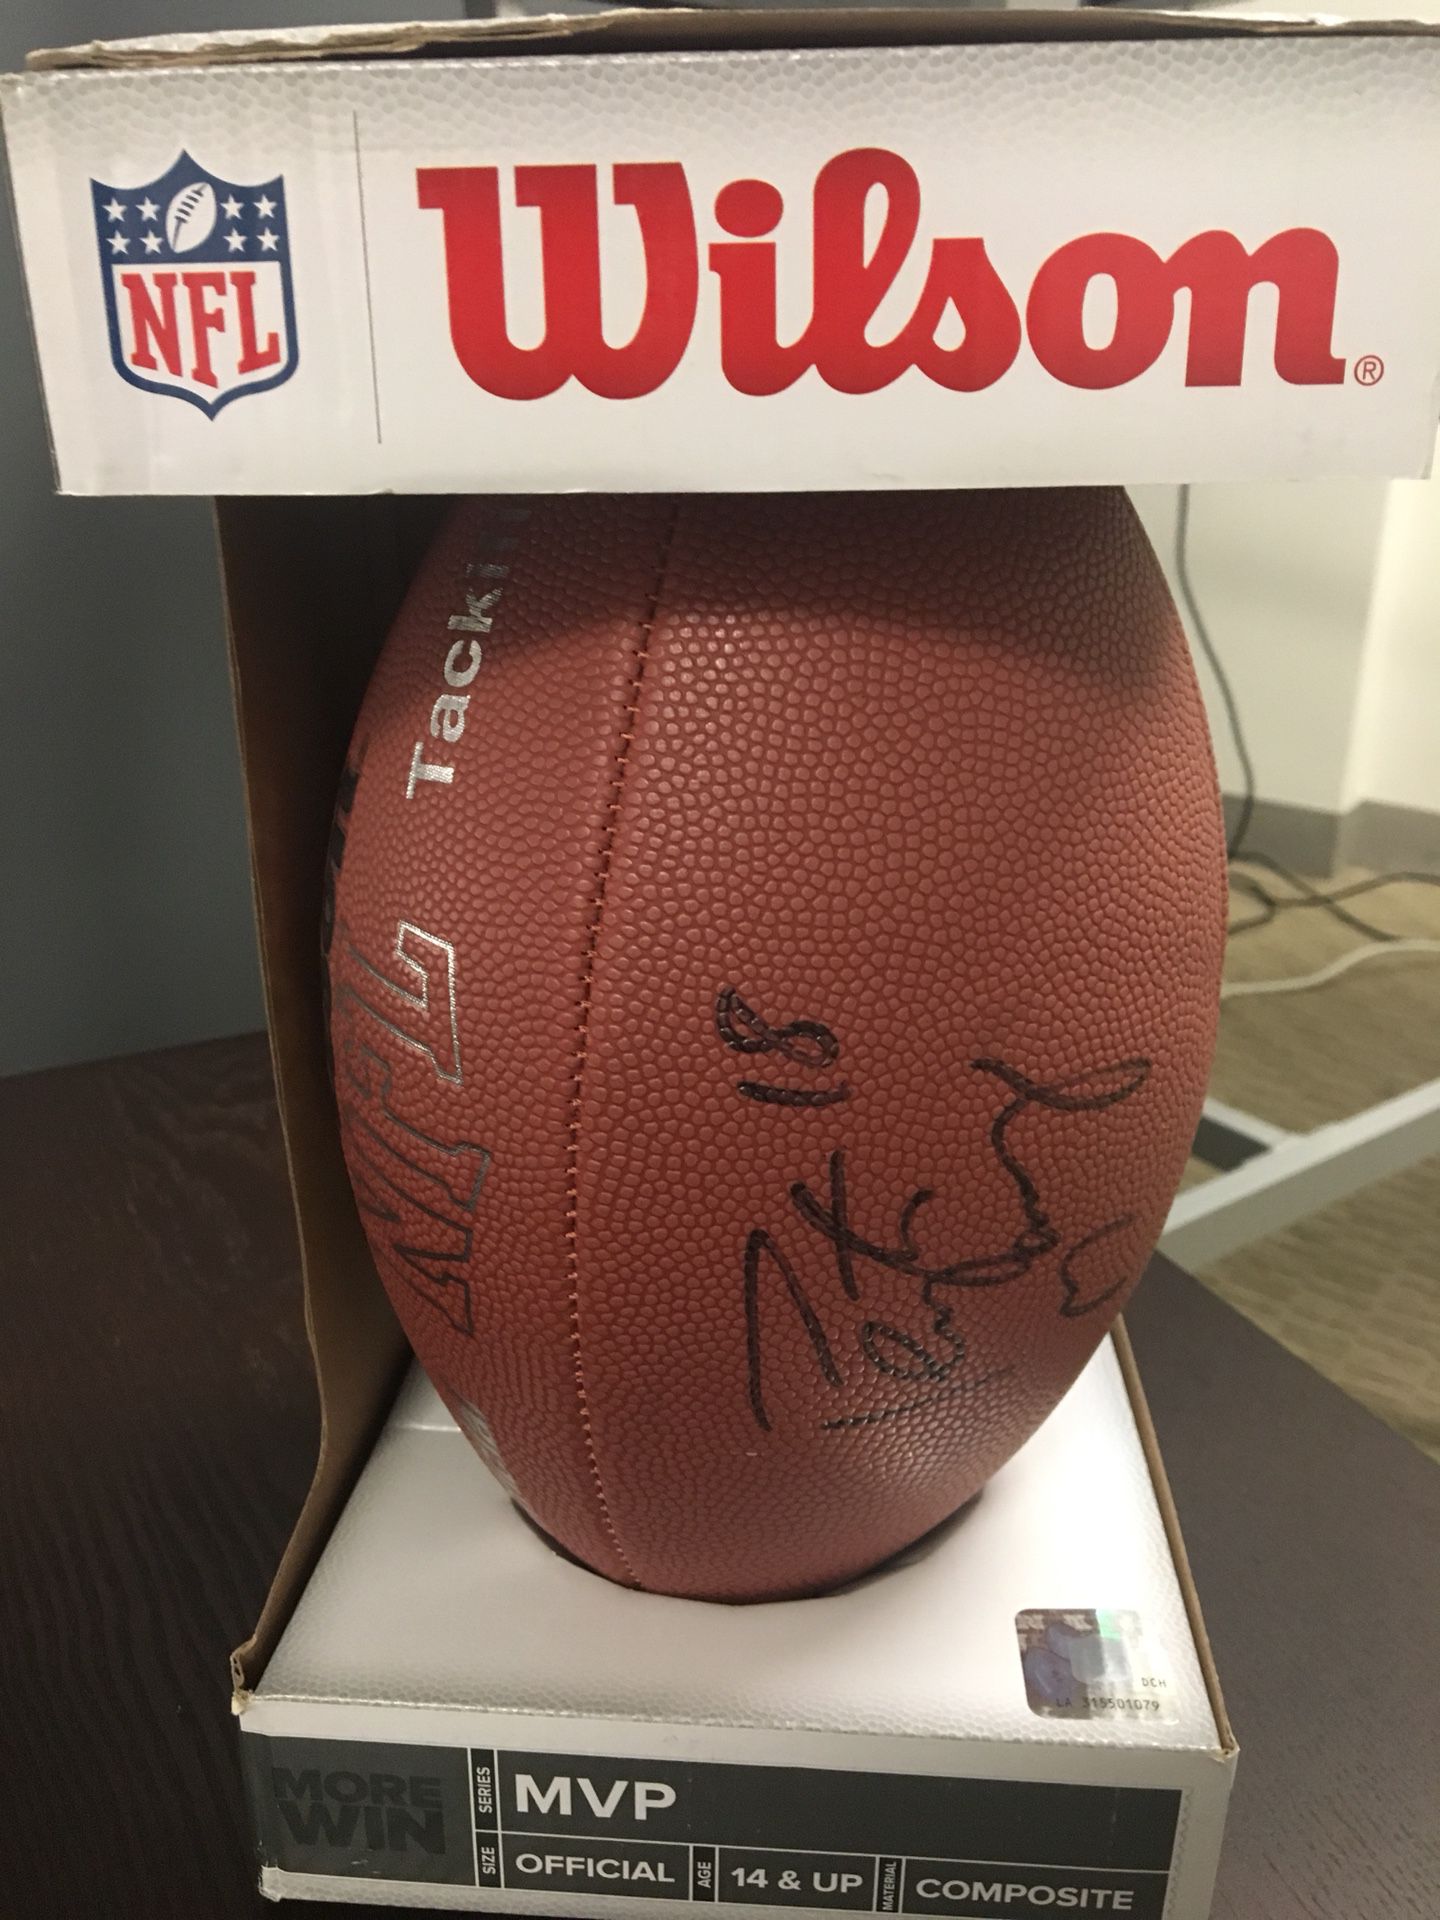 Autographed Peyton Manning football